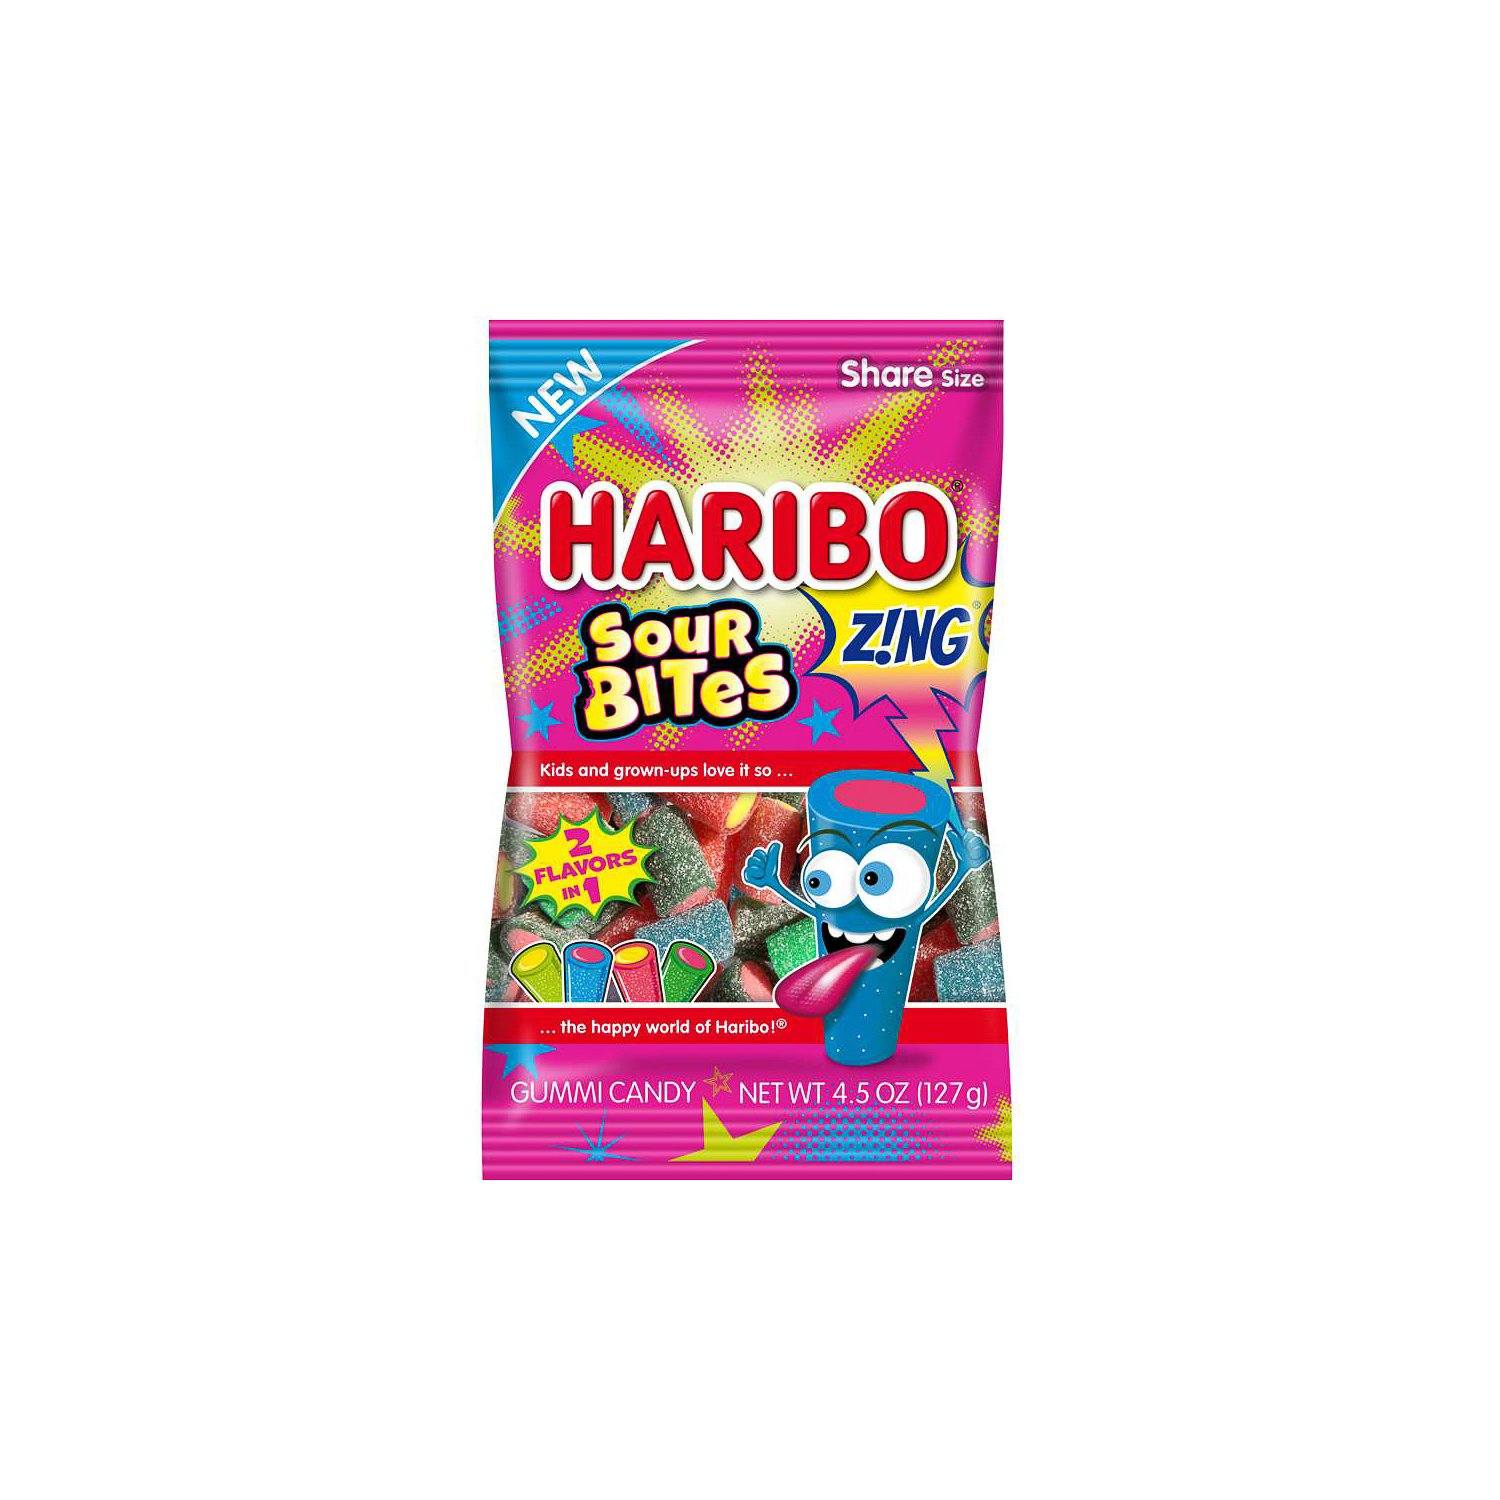 Haribo Gummi Candies Meltable Haribo ZING Sour Bites 4.5 Ounce 